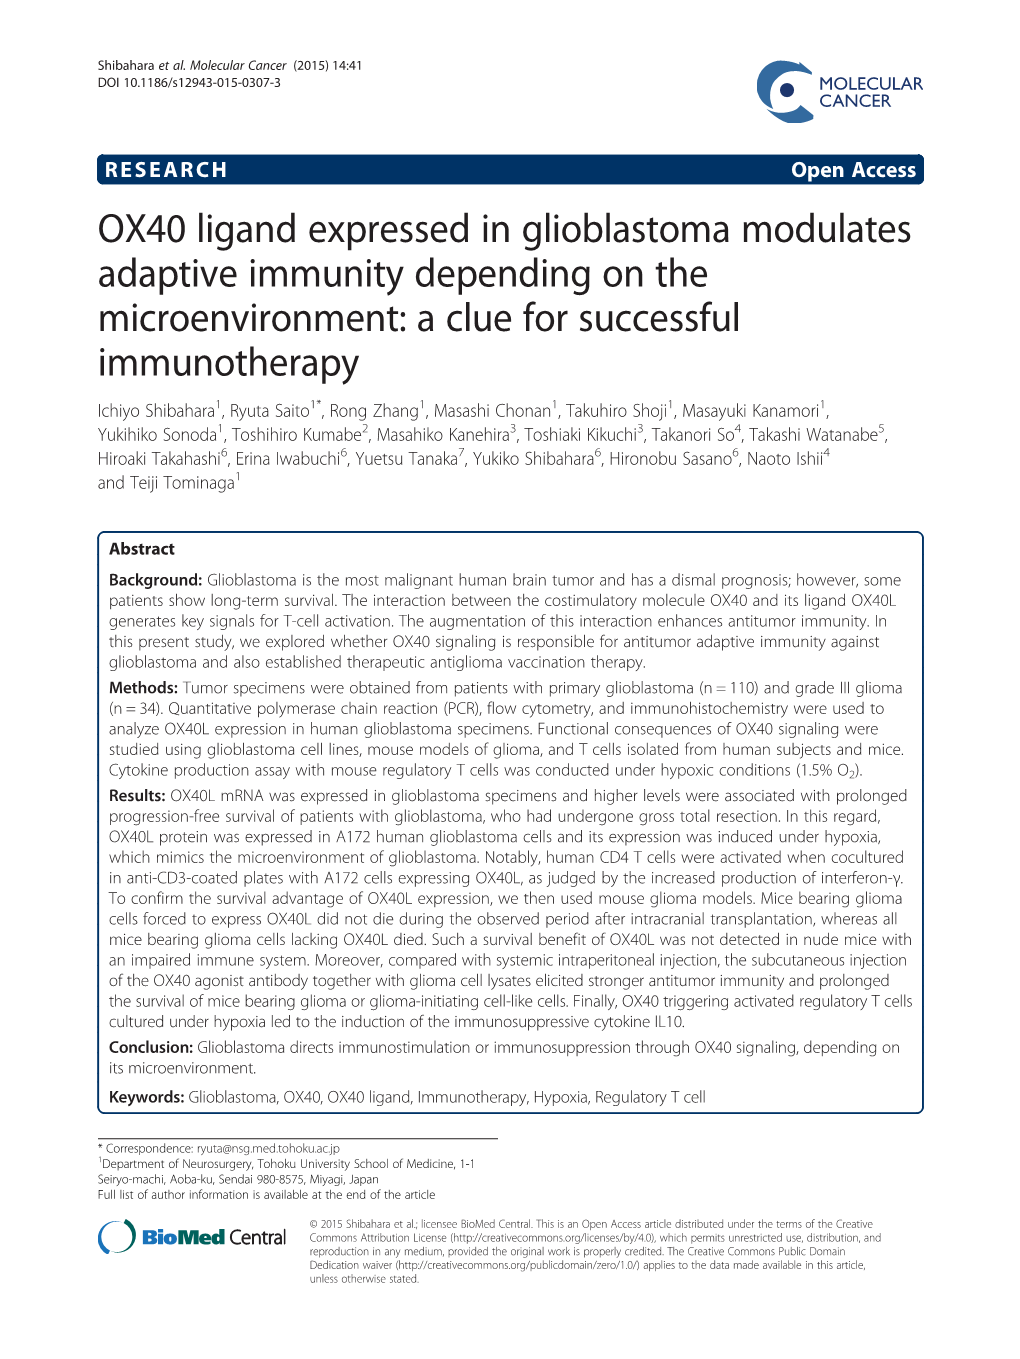 OX40 Ligand Expressed in Glioblastoma Modulates Adaptive